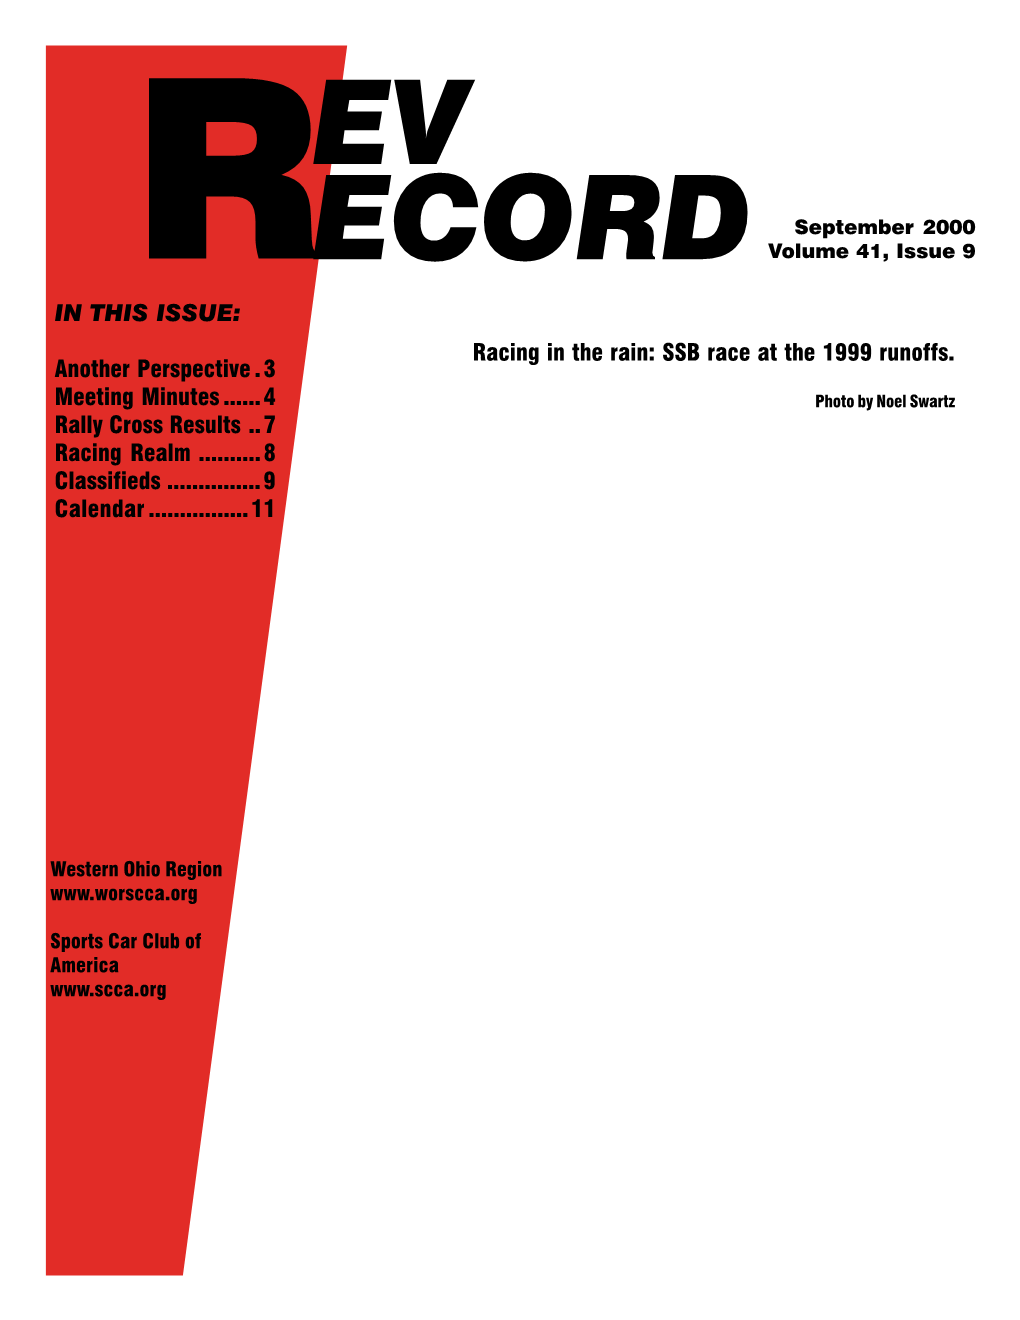 Rev Record September 2000